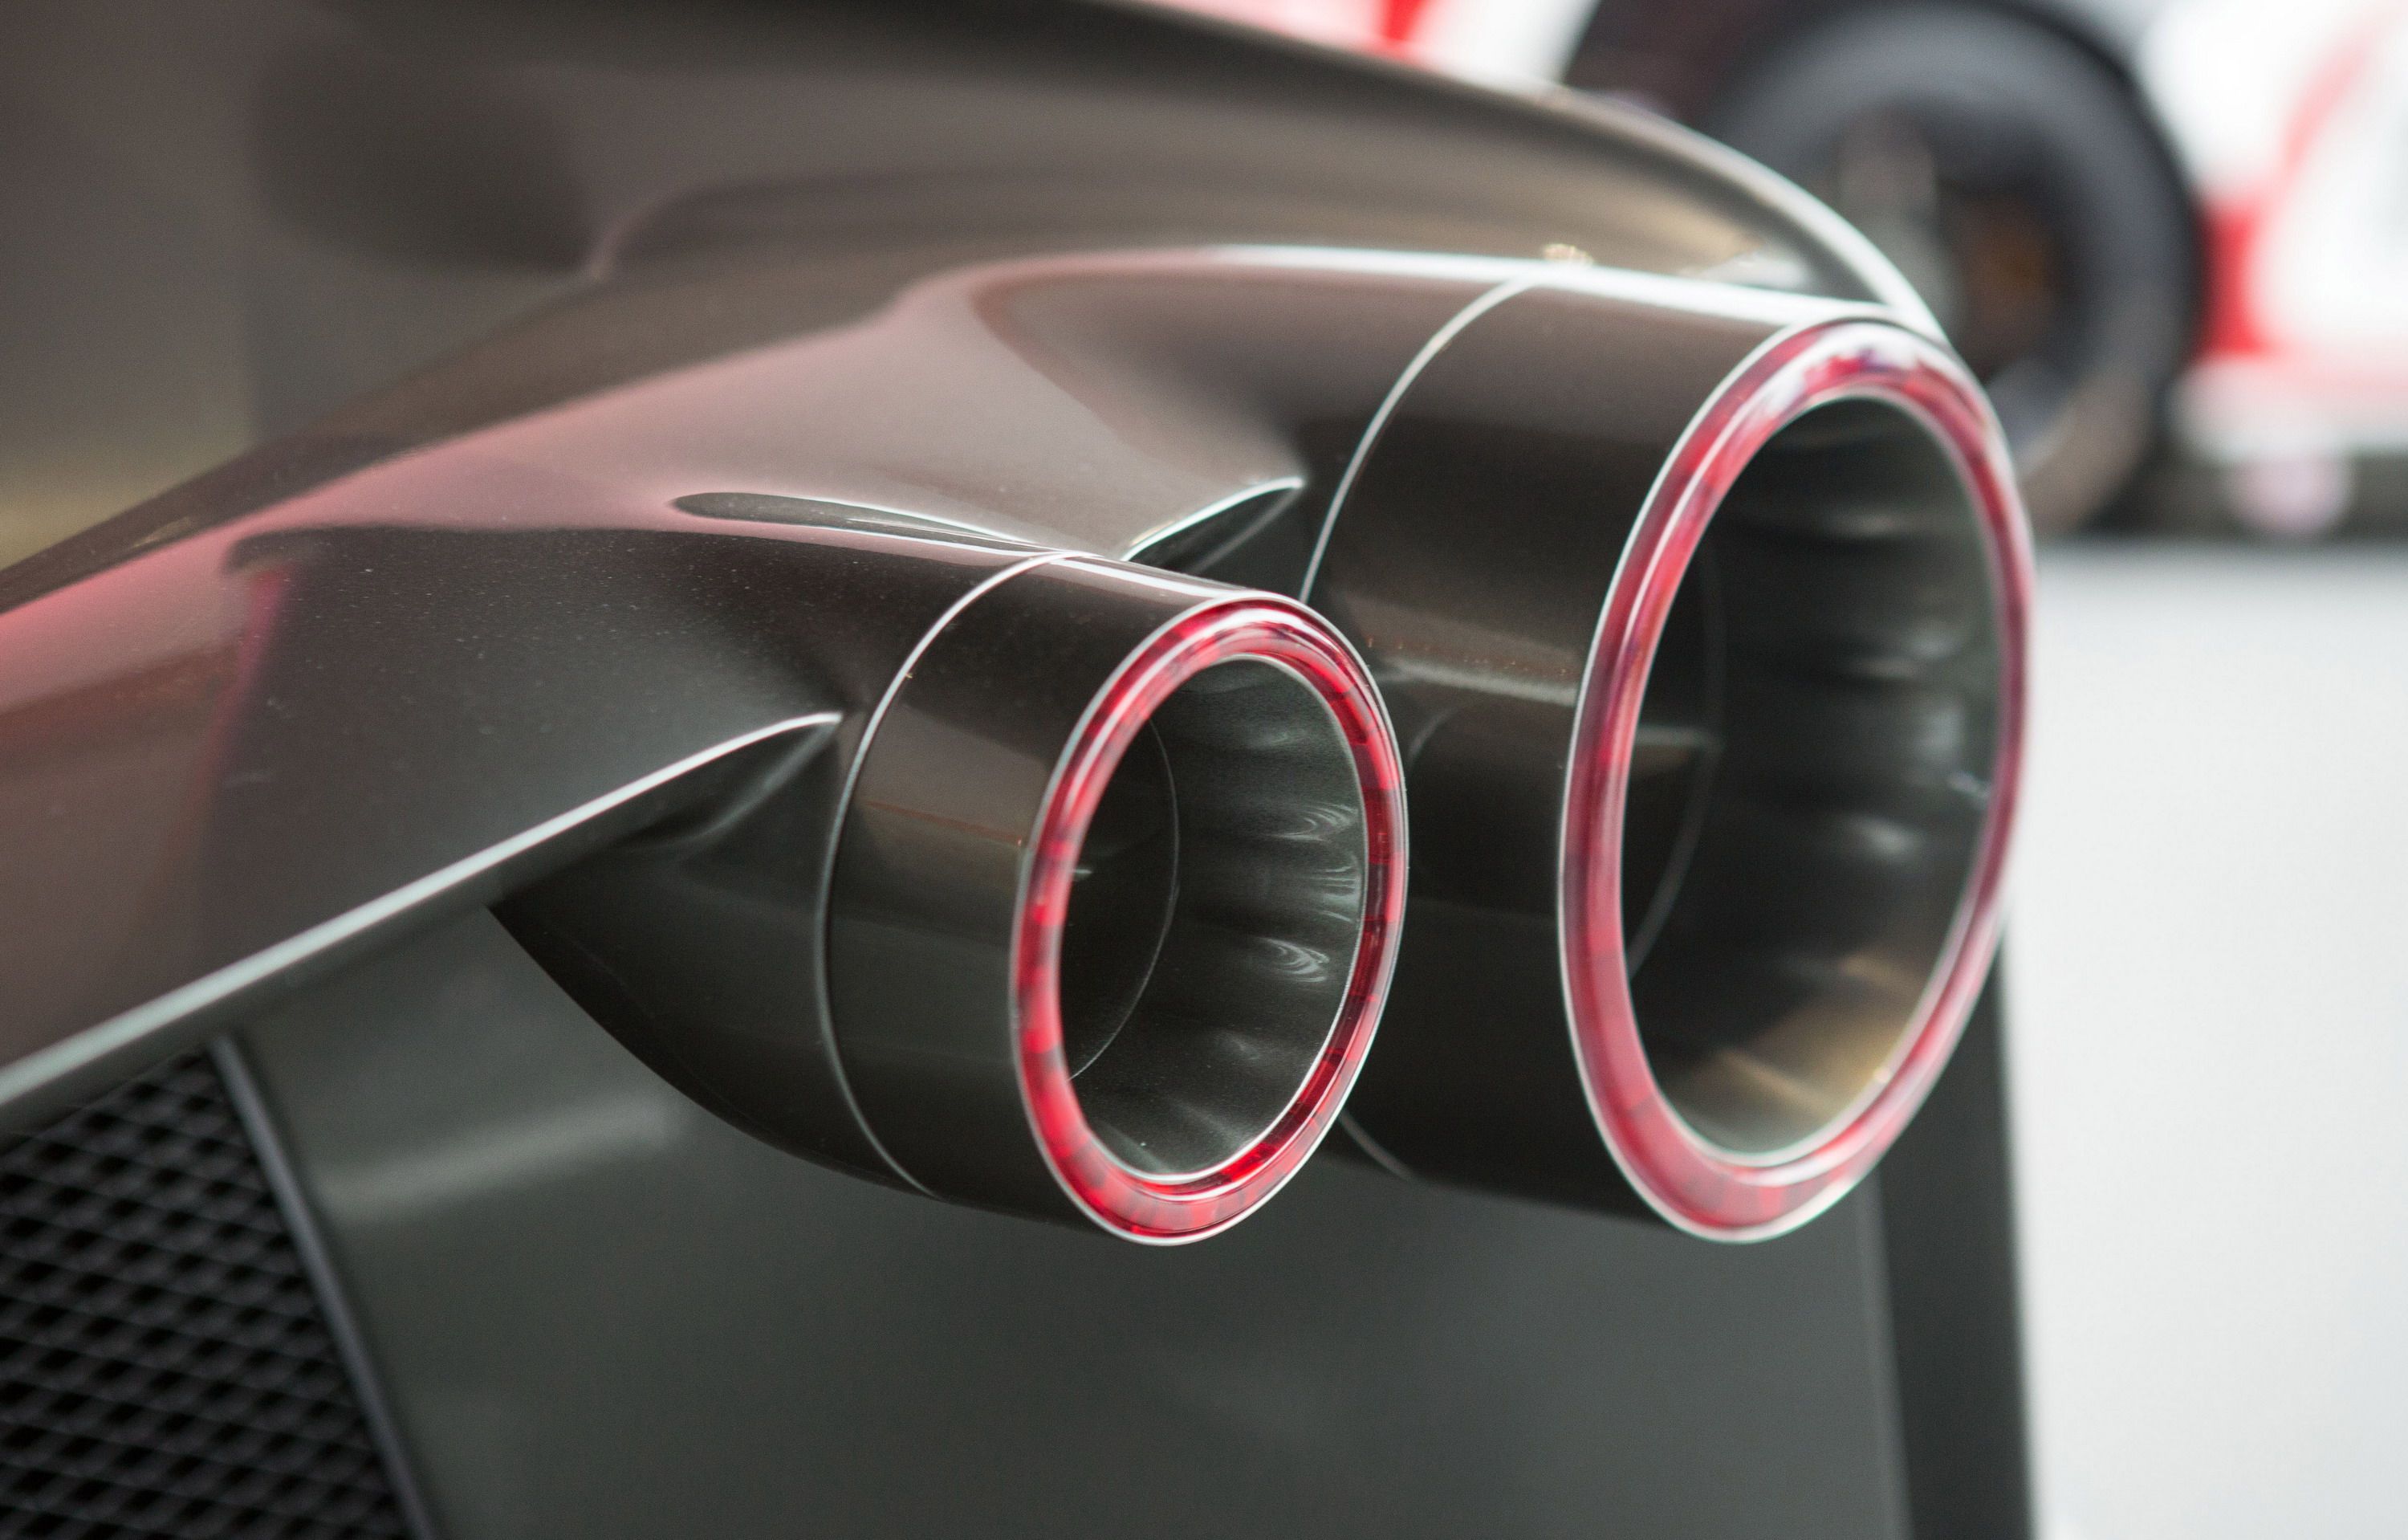 2014 Nissan Concept 2020 Vision Gran Turismo